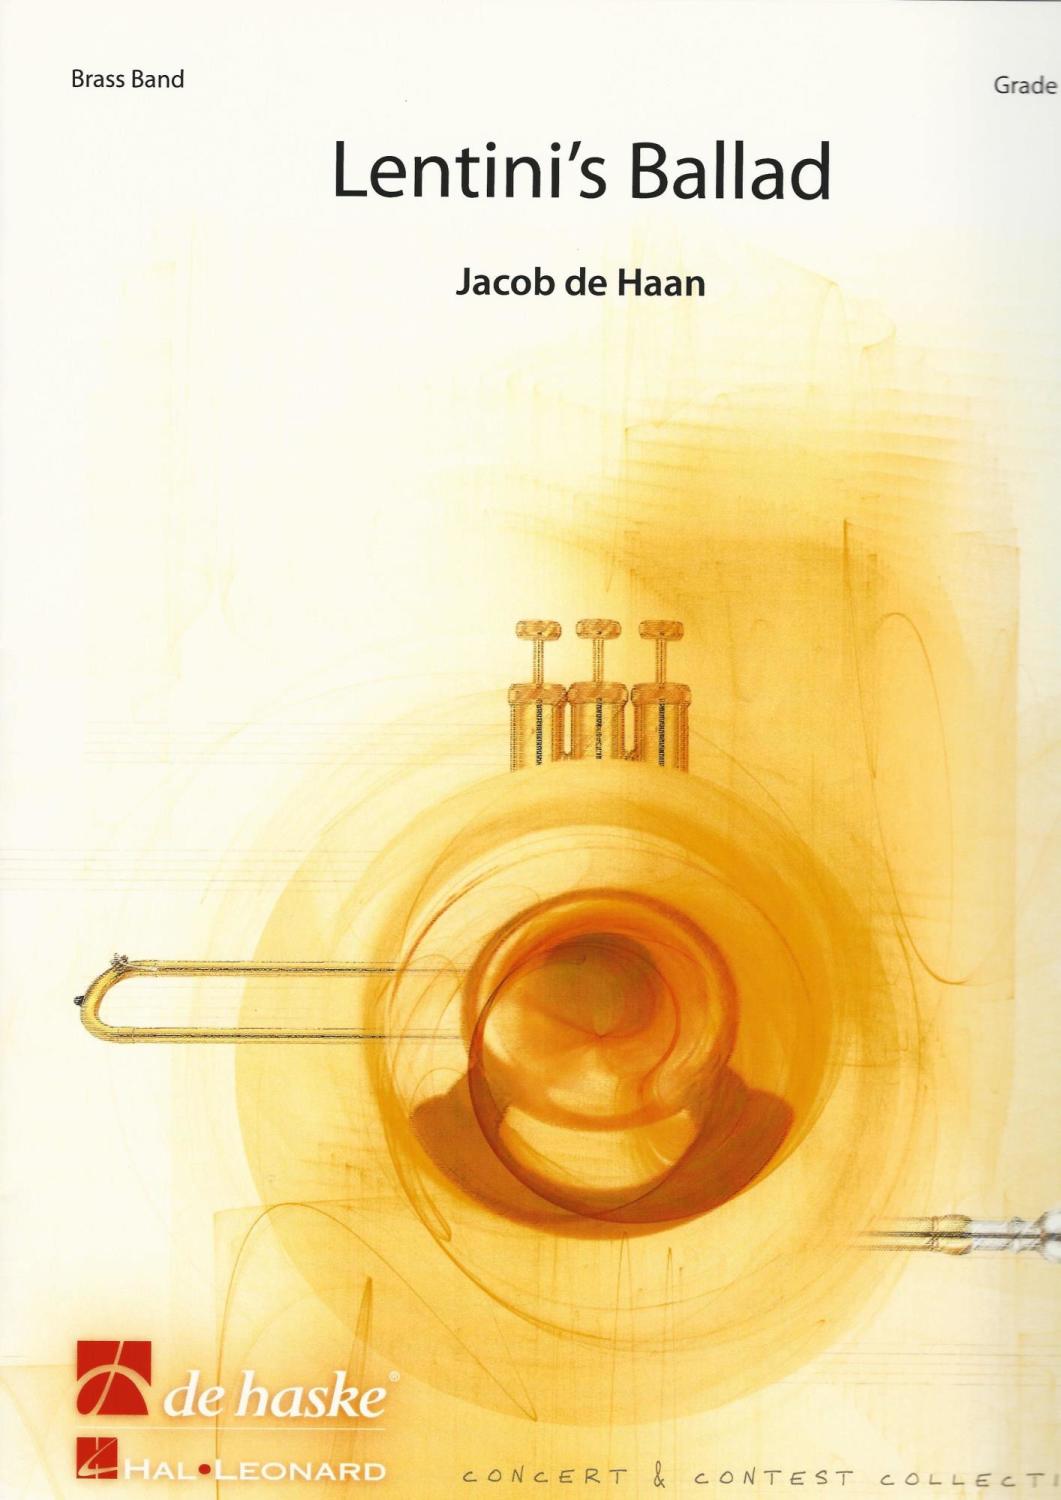 Lentini's Ballad for Brass Band - Jacob de Haan